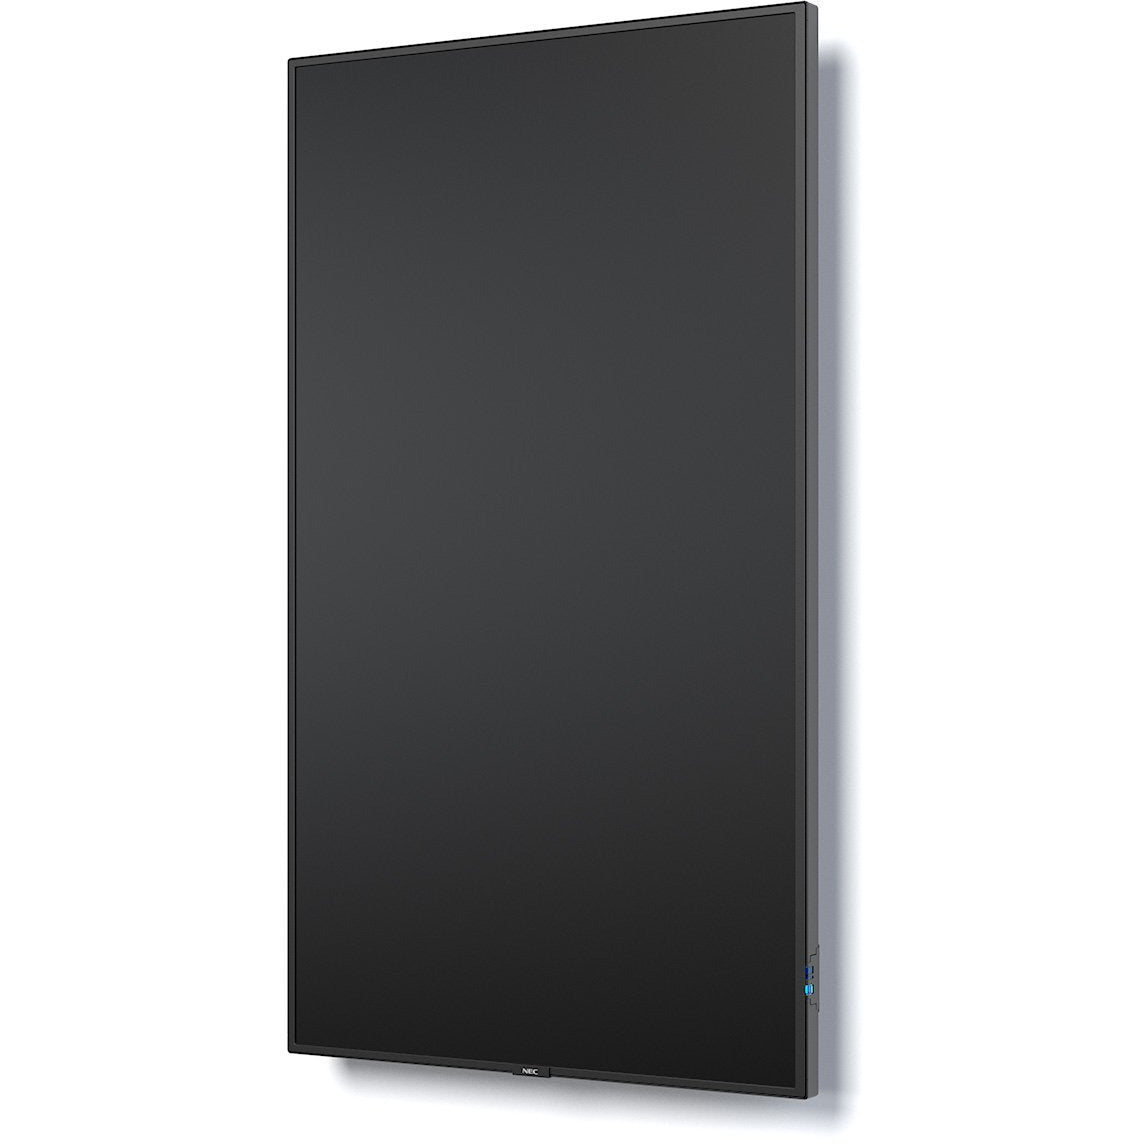 Dark Slate Gray NEC MultiSync® P435-MPi4 LCD 43" Professional Large Format Displays (incl. NEC MediaPlayer)